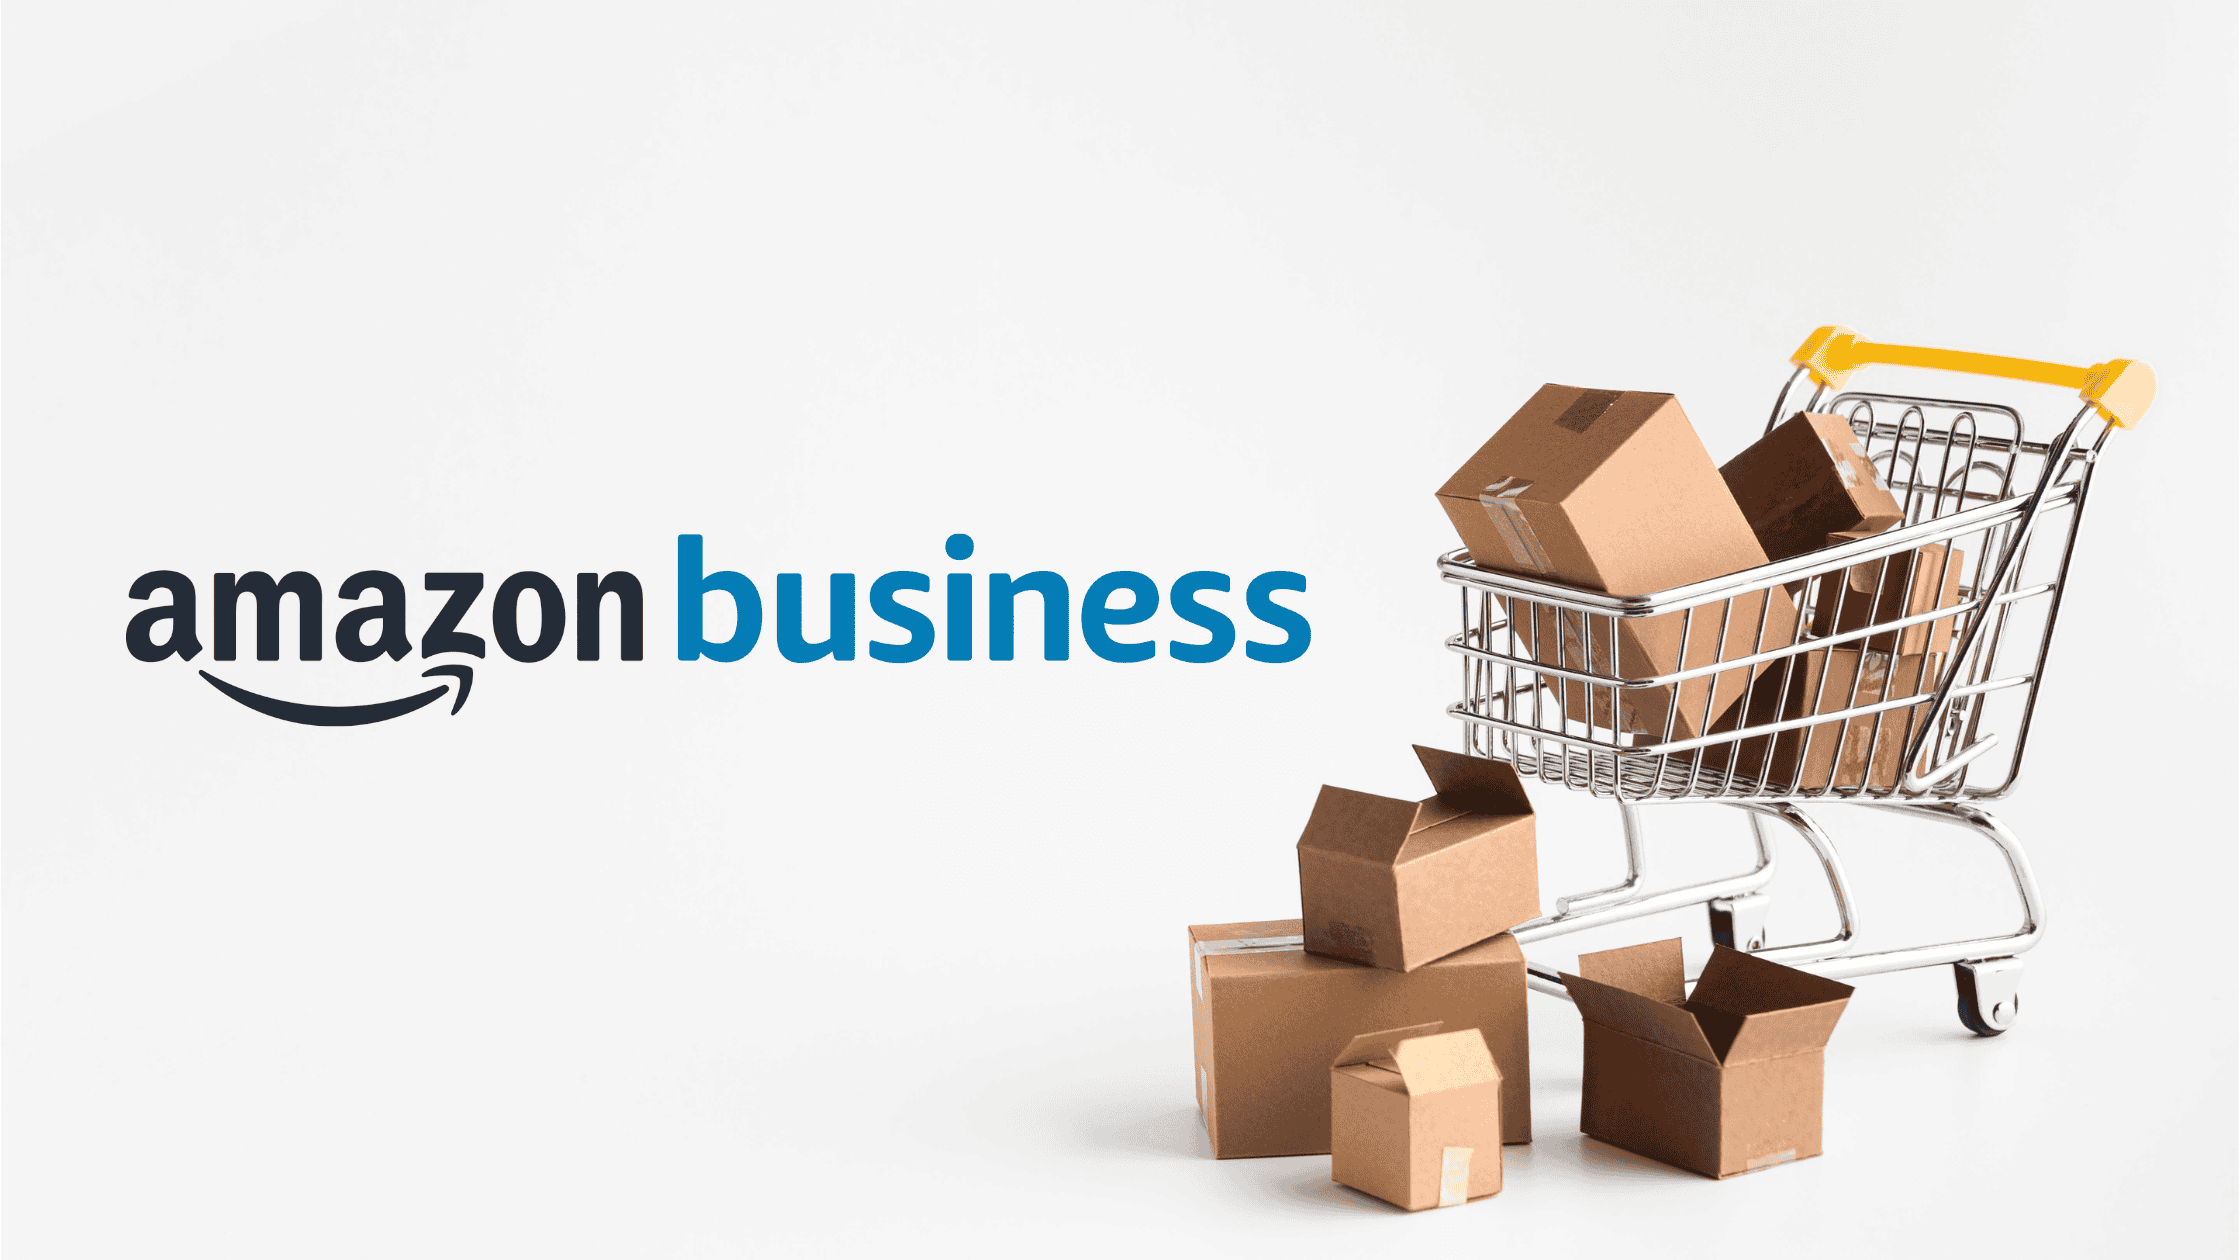 Amazon Business - Multiplicalia expertos en marketplaces